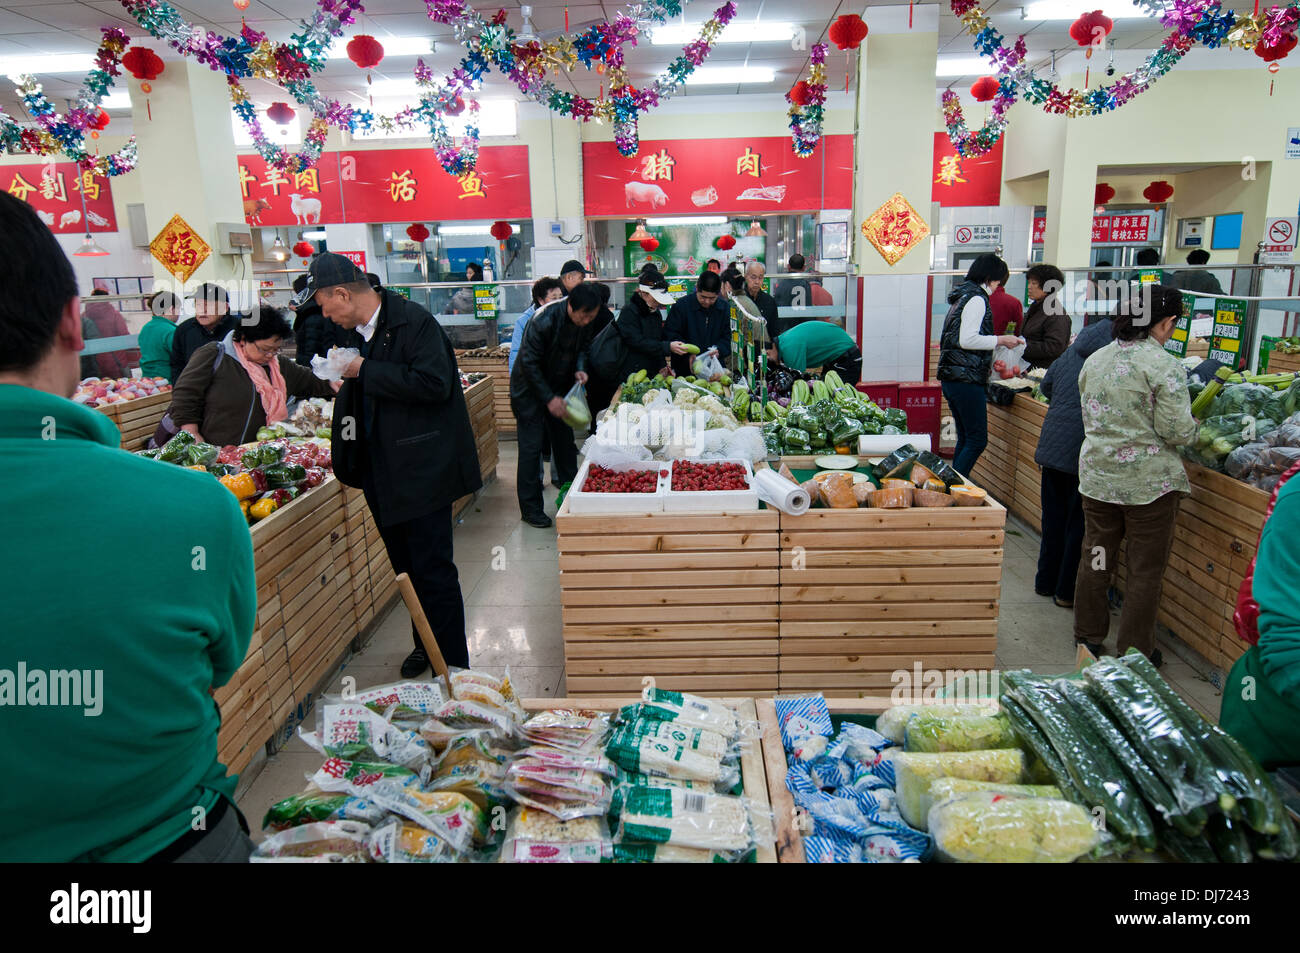 greengrocery Shop in Peking, China Stockfoto